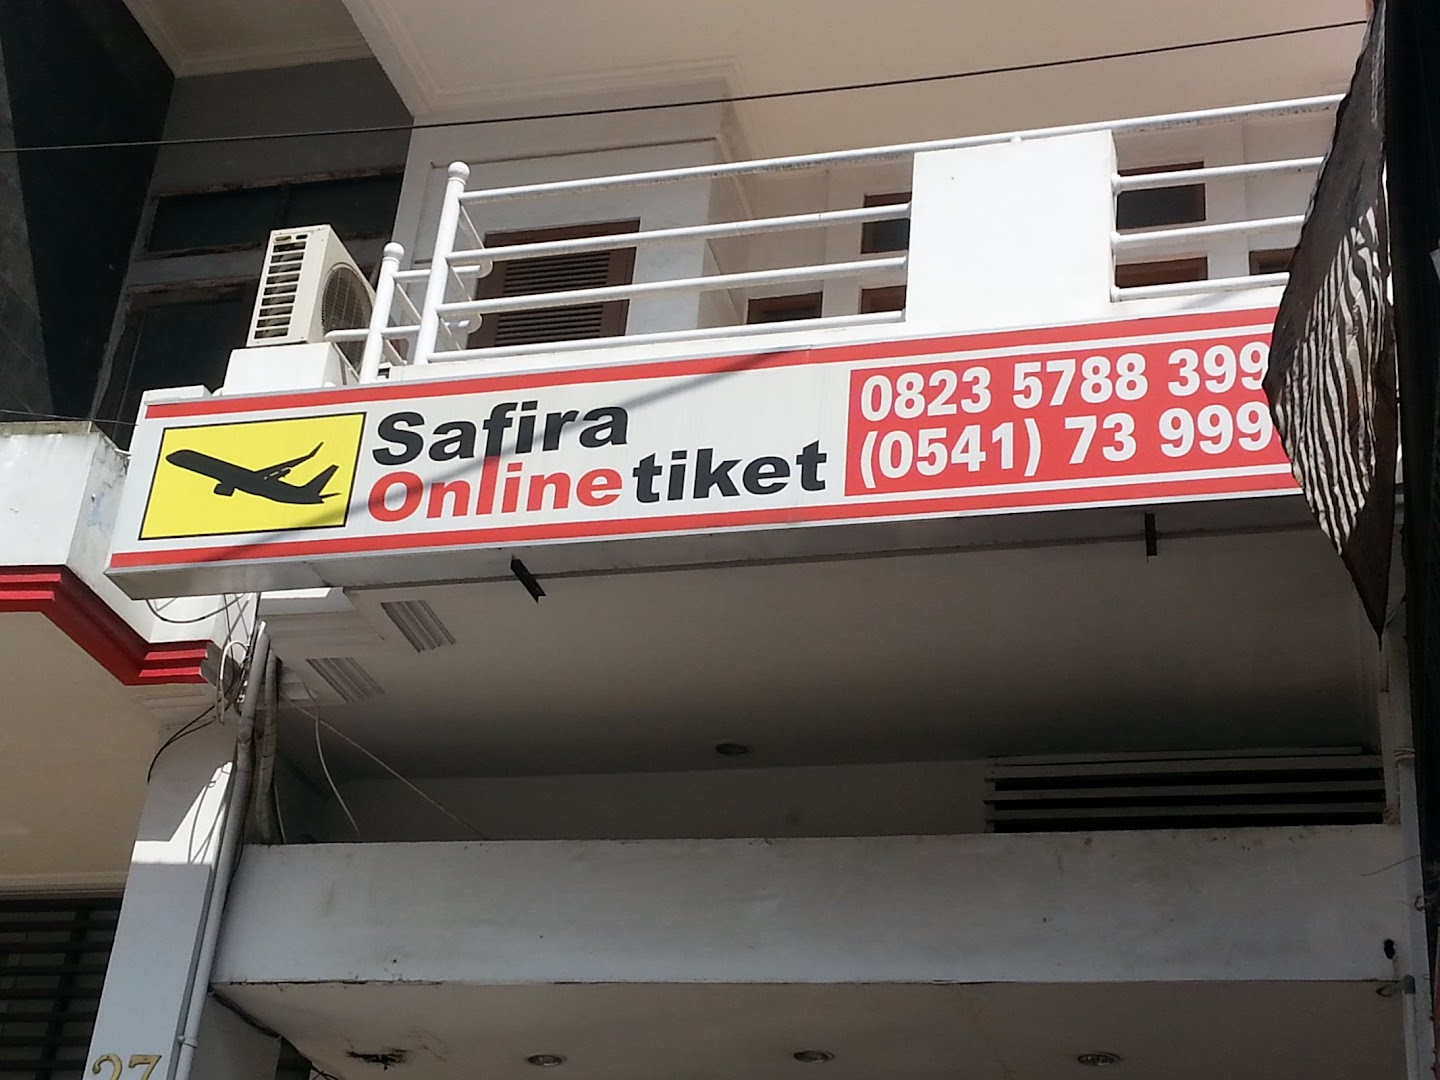 Safira Online Tiket Photo